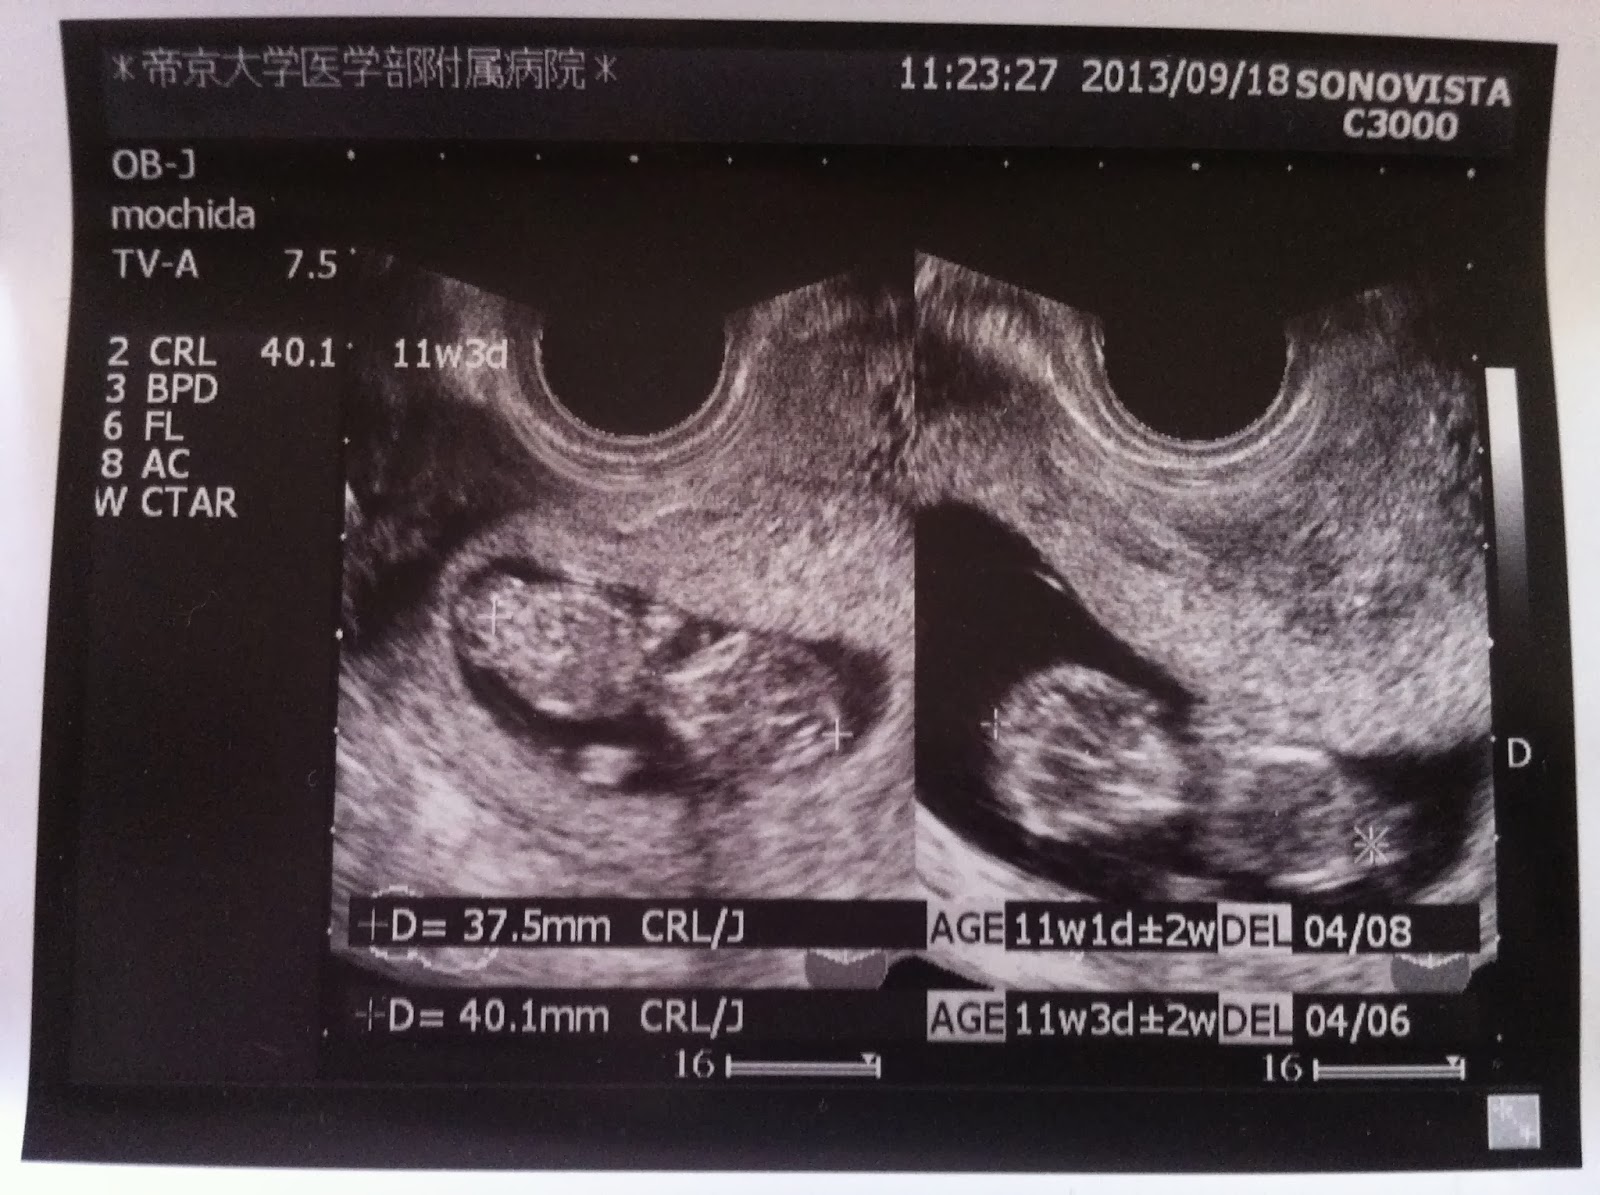 Niblog 双子妊娠11週目のエコー画像 11w3d 検診 Vol 6